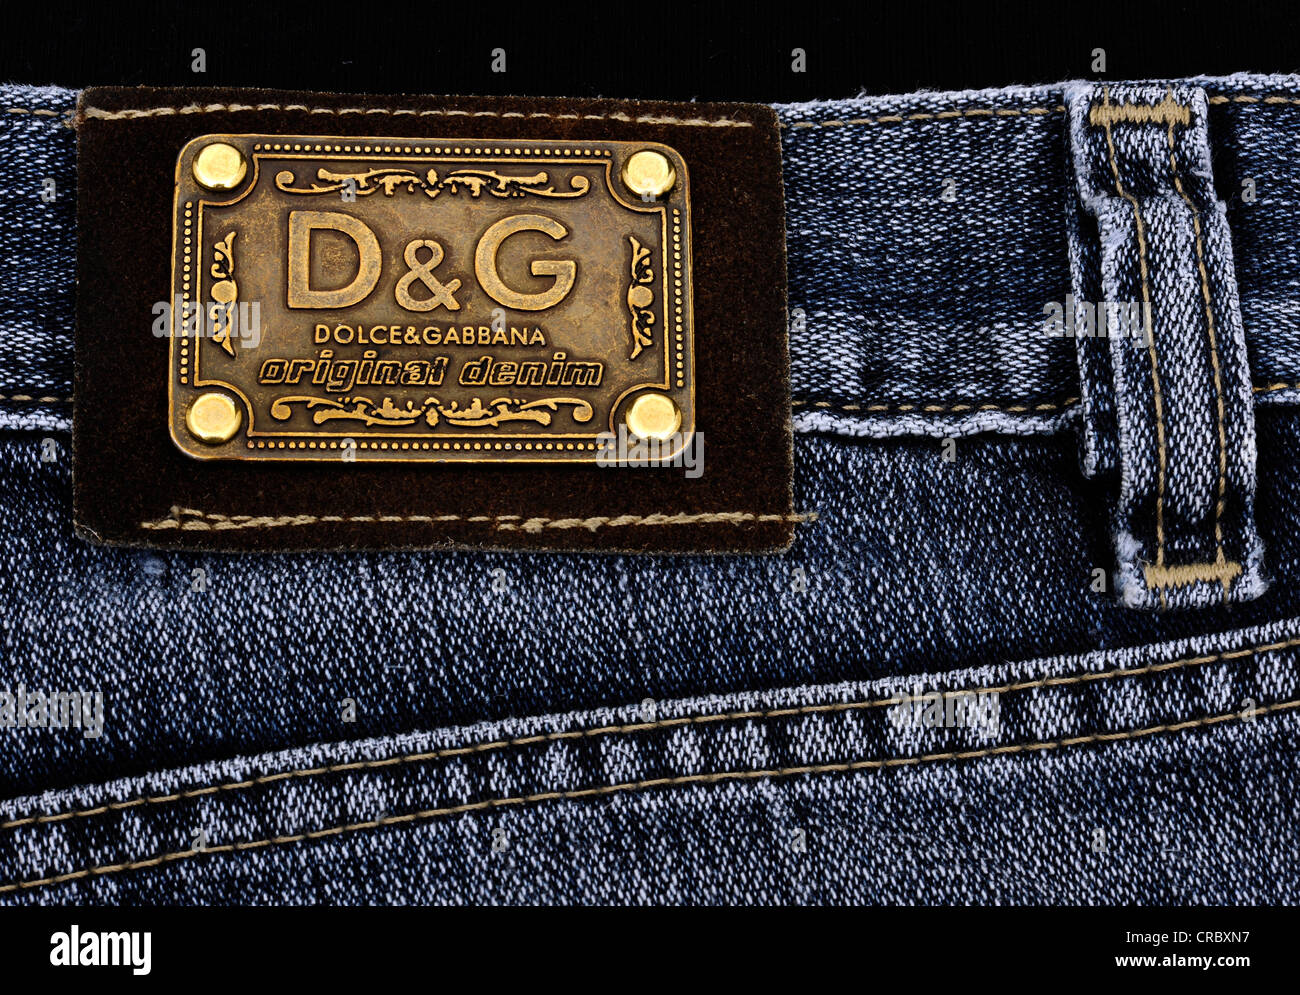 Dolge & Gabbana label on jeans Stock Photo - Alamy